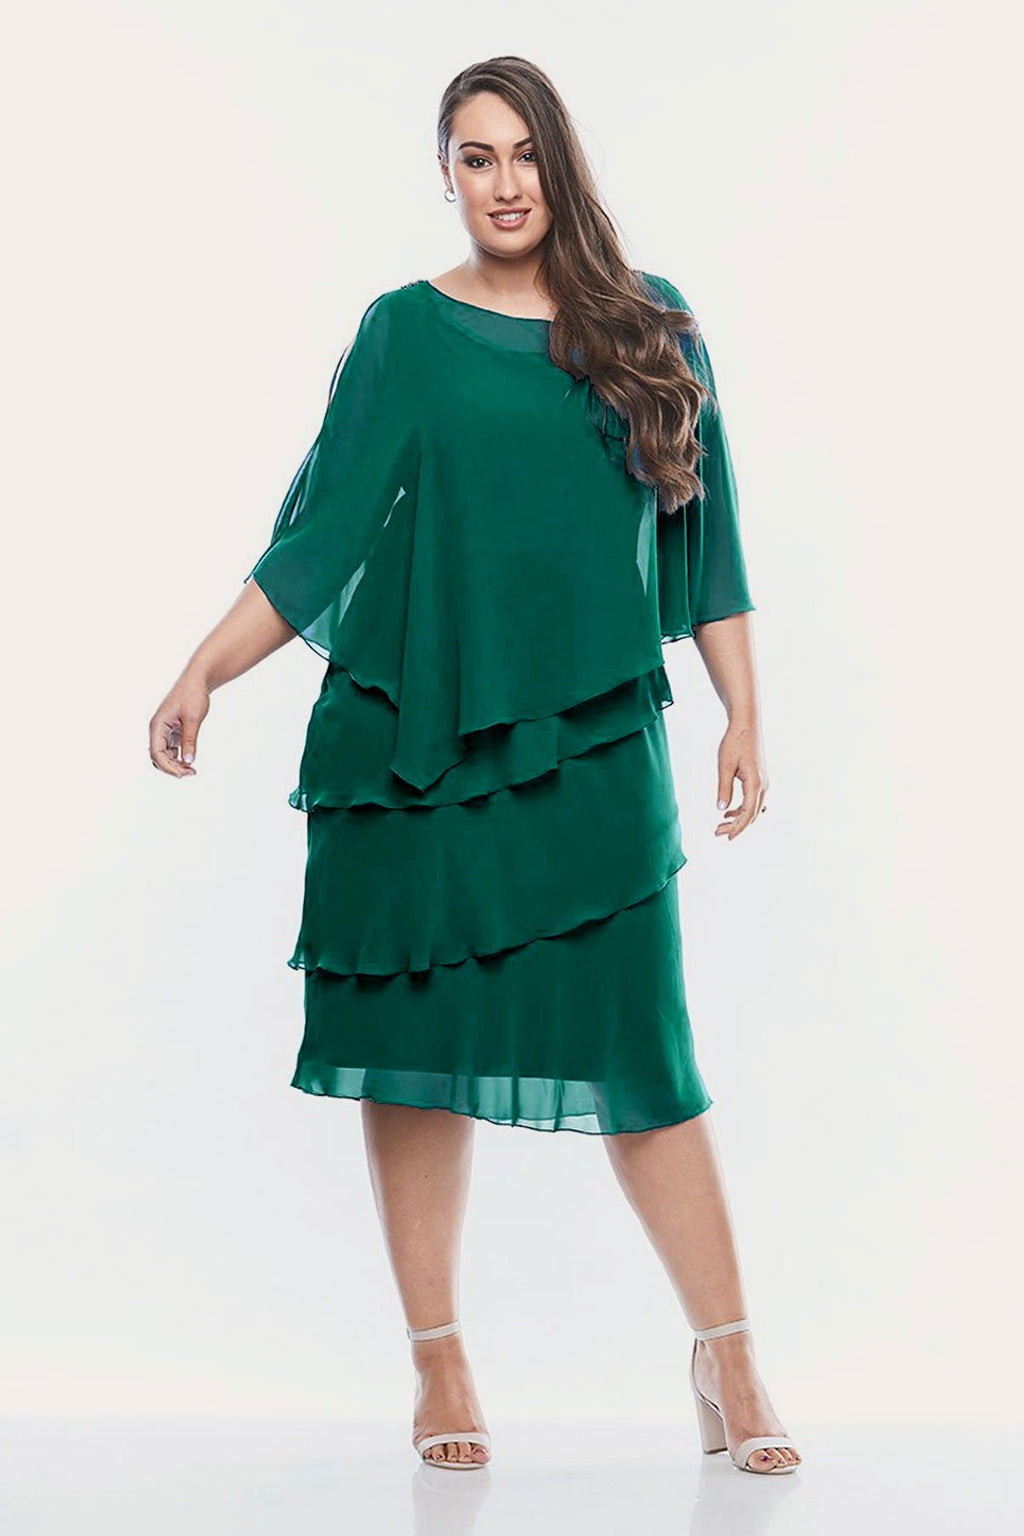 Jayla Jones Chiffon layered dress with overlay LJ0003 - Emerald